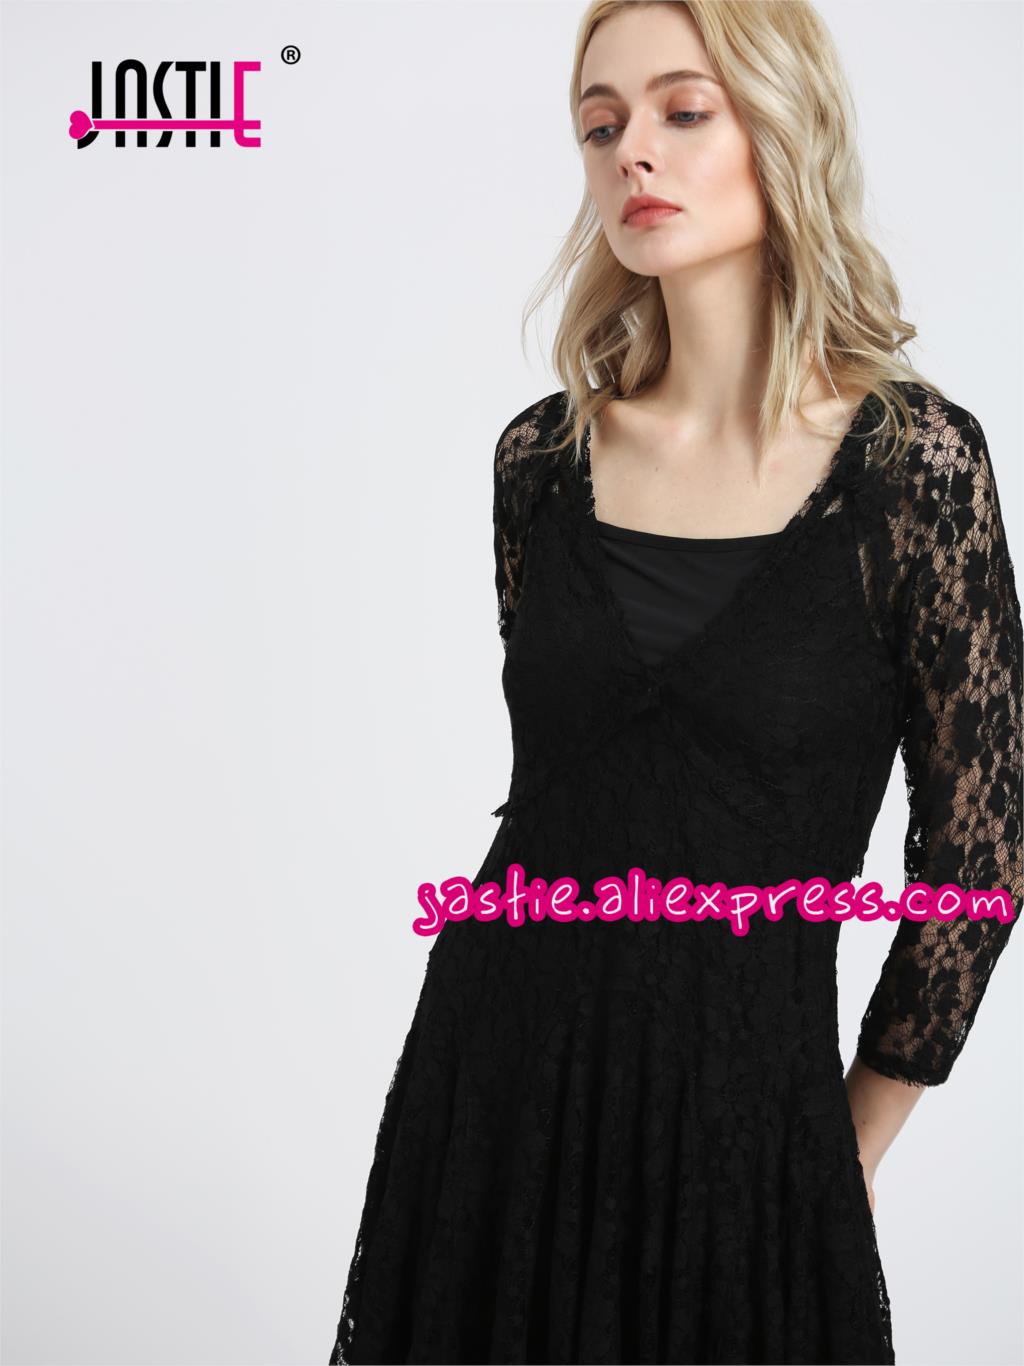 Jastie-Summer-Style-Boho-Romantic-Sheer-Floral-Lace-Dress-V-Neck-Intimately-Flowy-Women-Dresses-No-L-32349511792